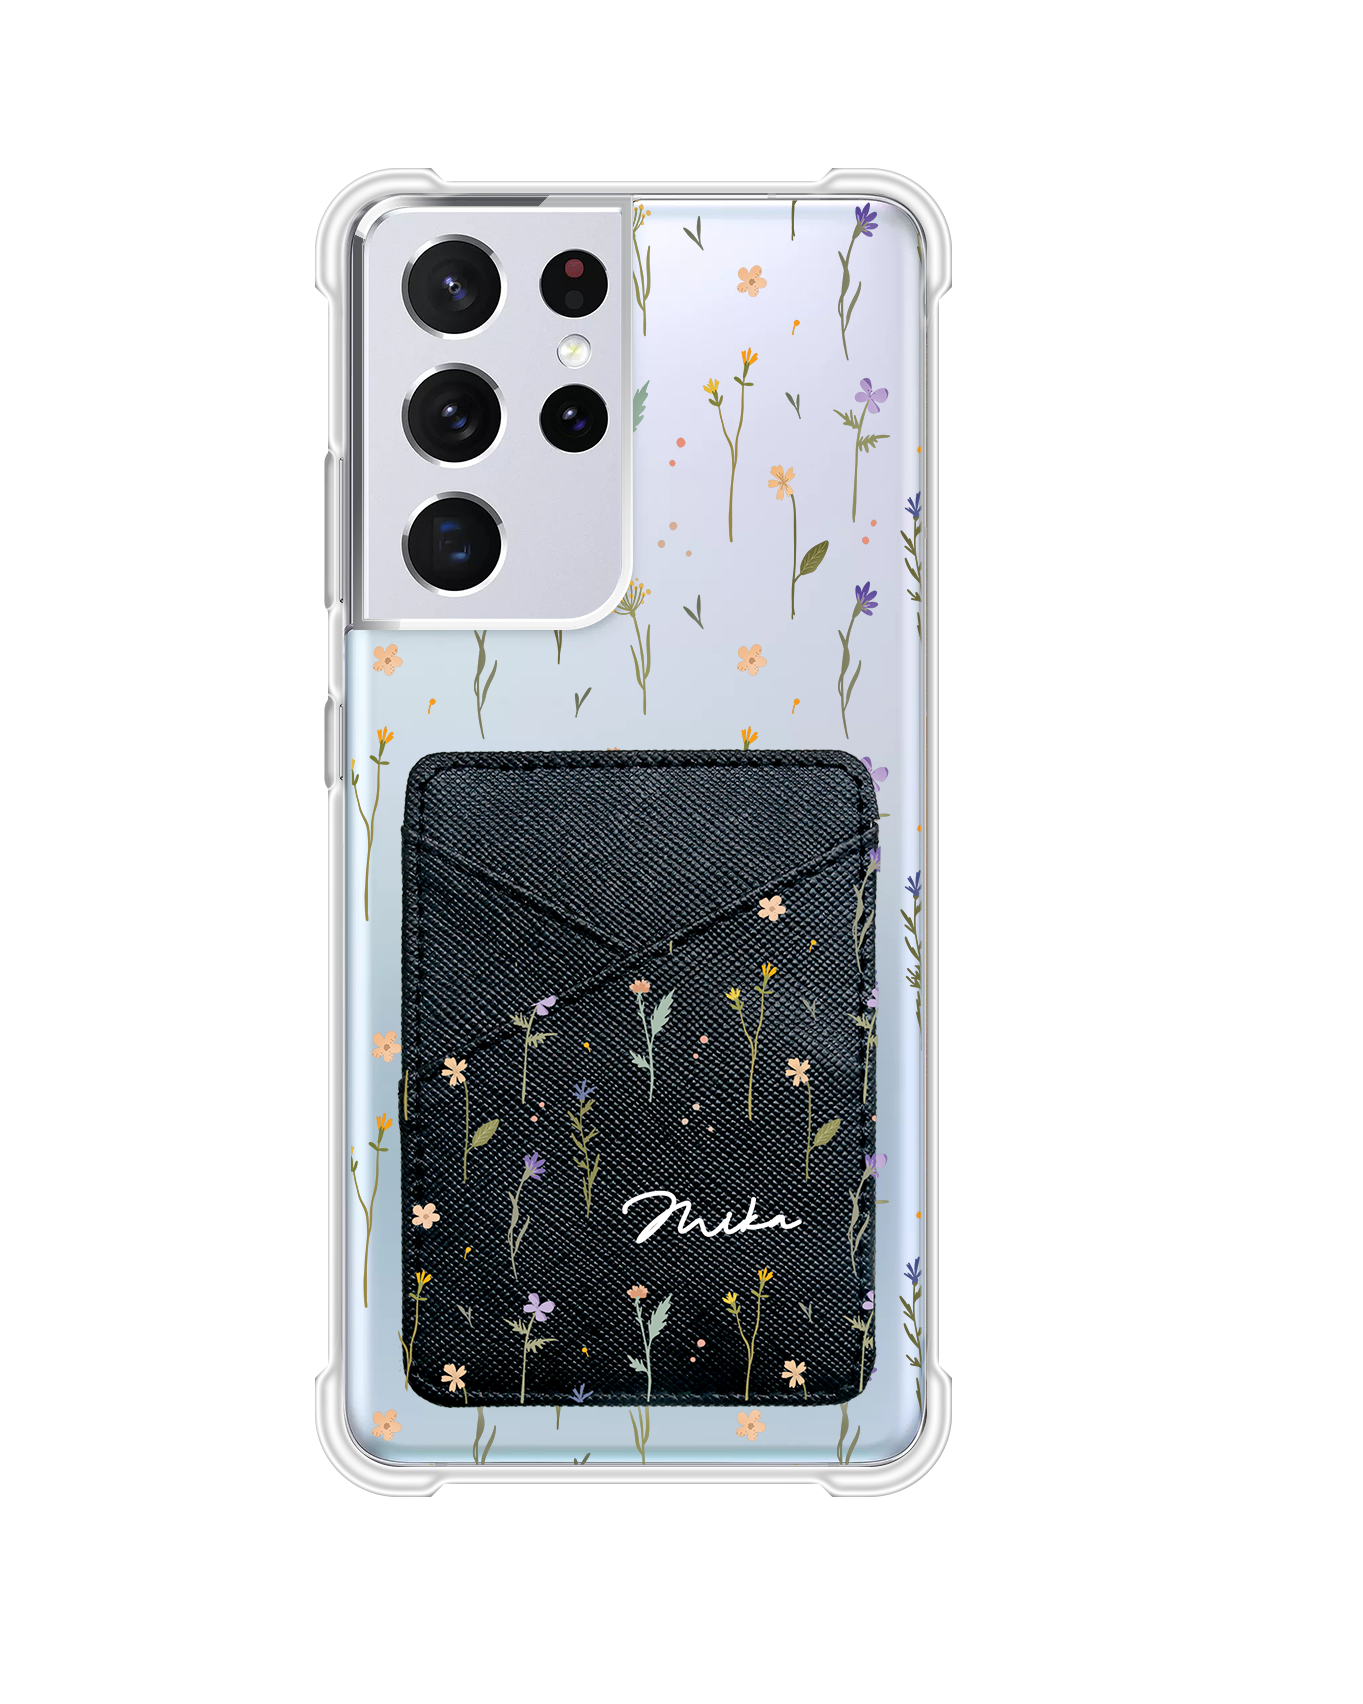 Android Phone Wallet Case - Botanical Garden 2.0